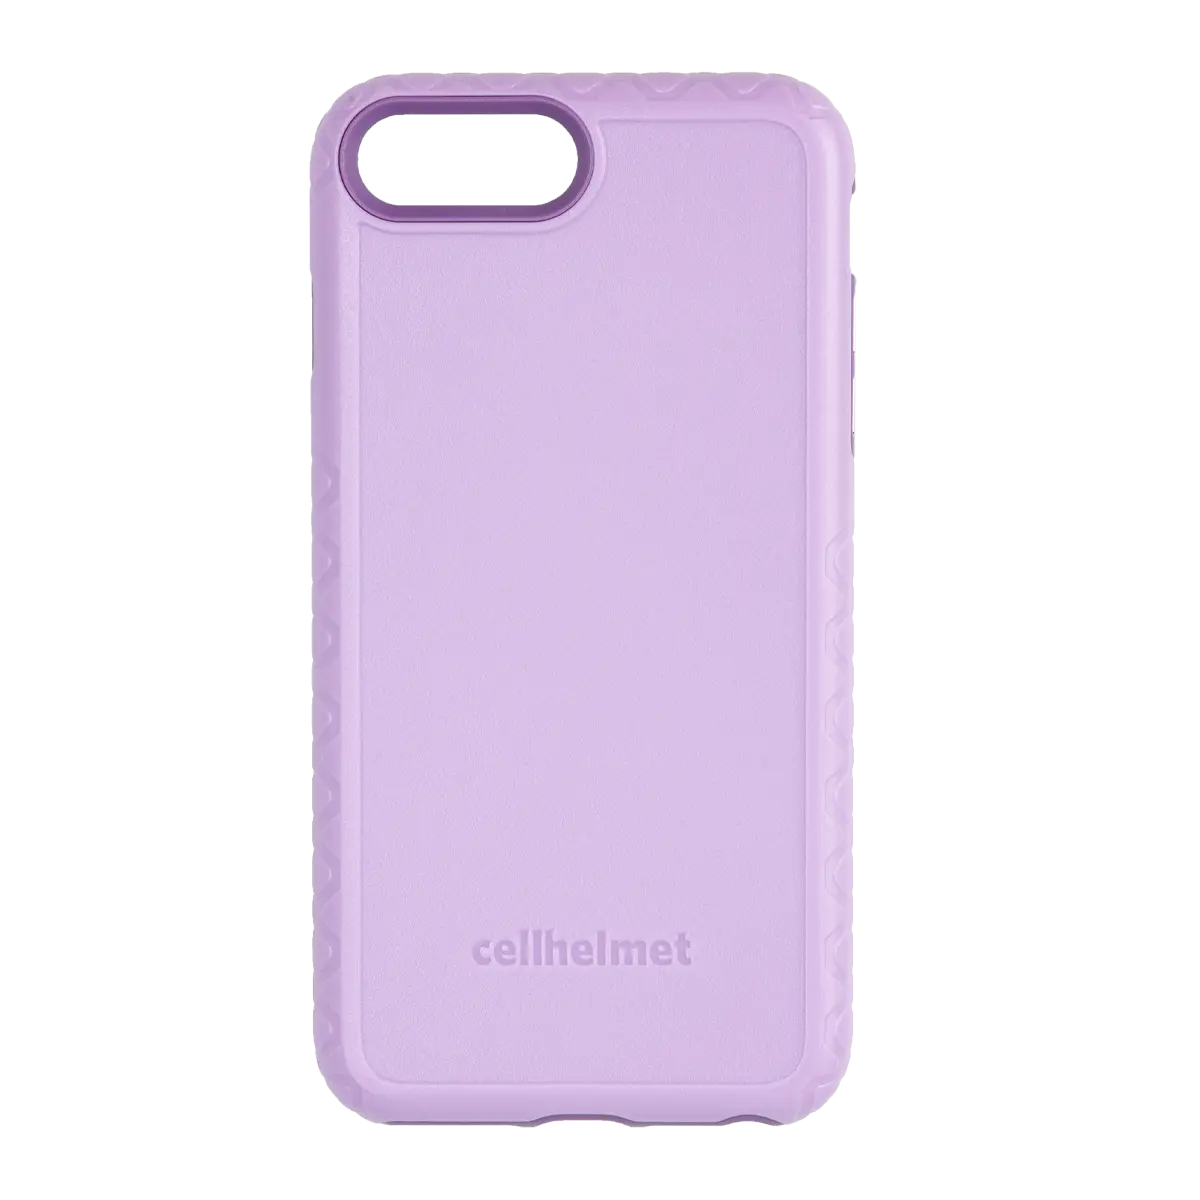 Purple cellhelmet Customizable Case for iPhone 8 Plus